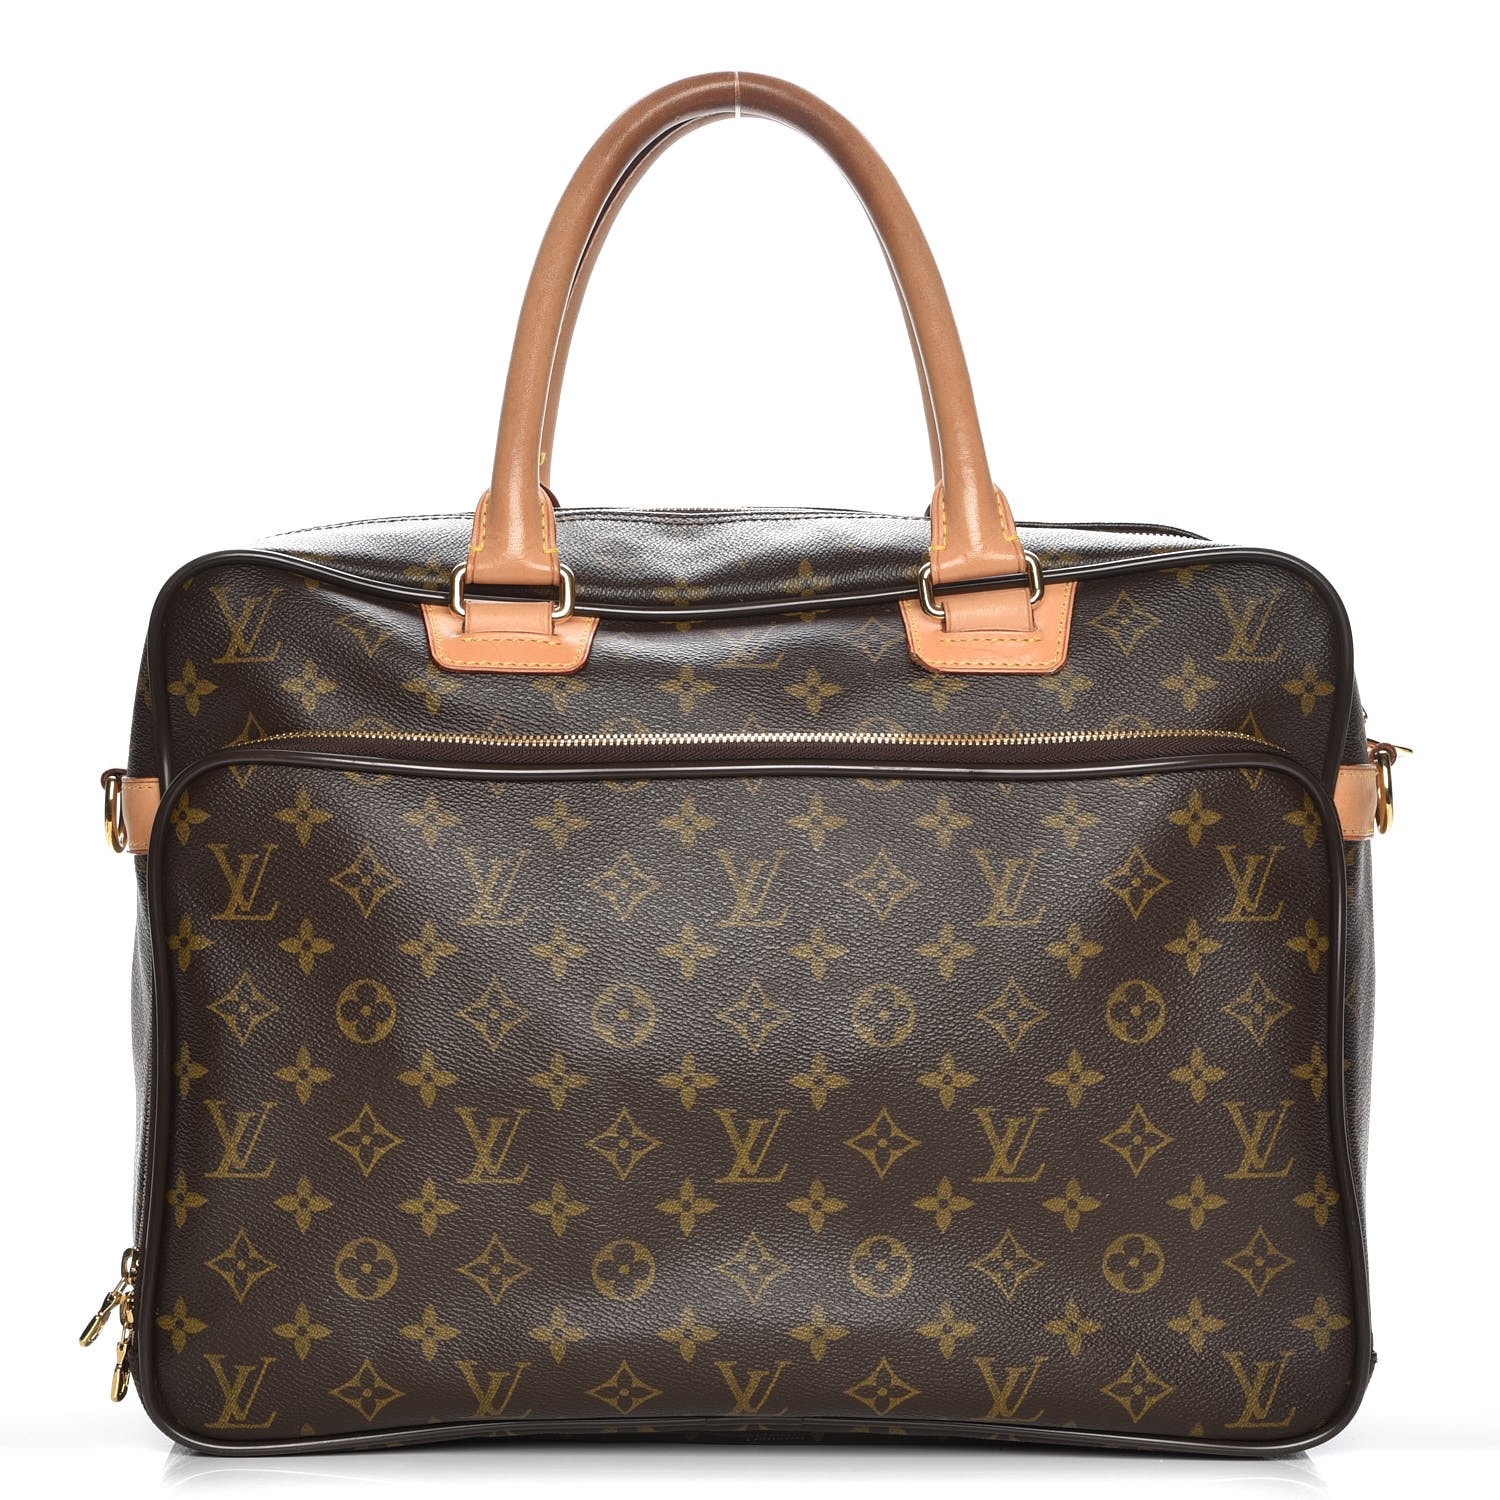 Neiman Marcus Louis Vuitton Tote Bags Under | Paul Smith